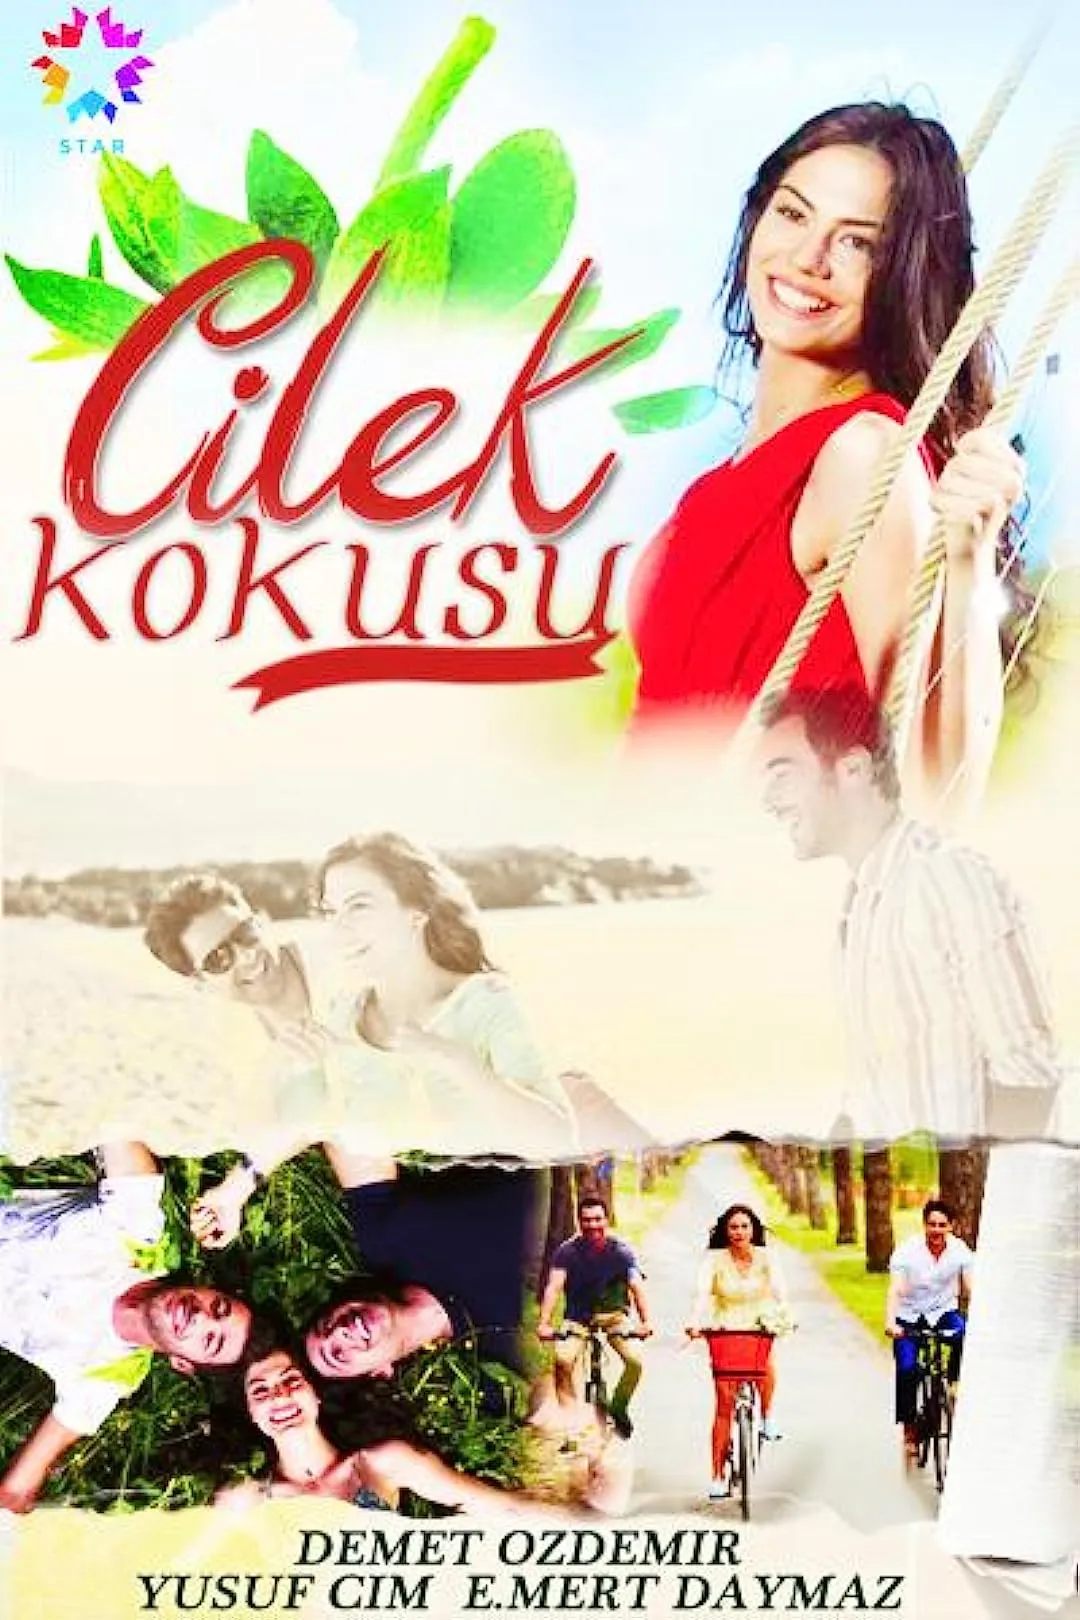 Cilek Kokusu | Miros de capsuni online subtitrat in romana